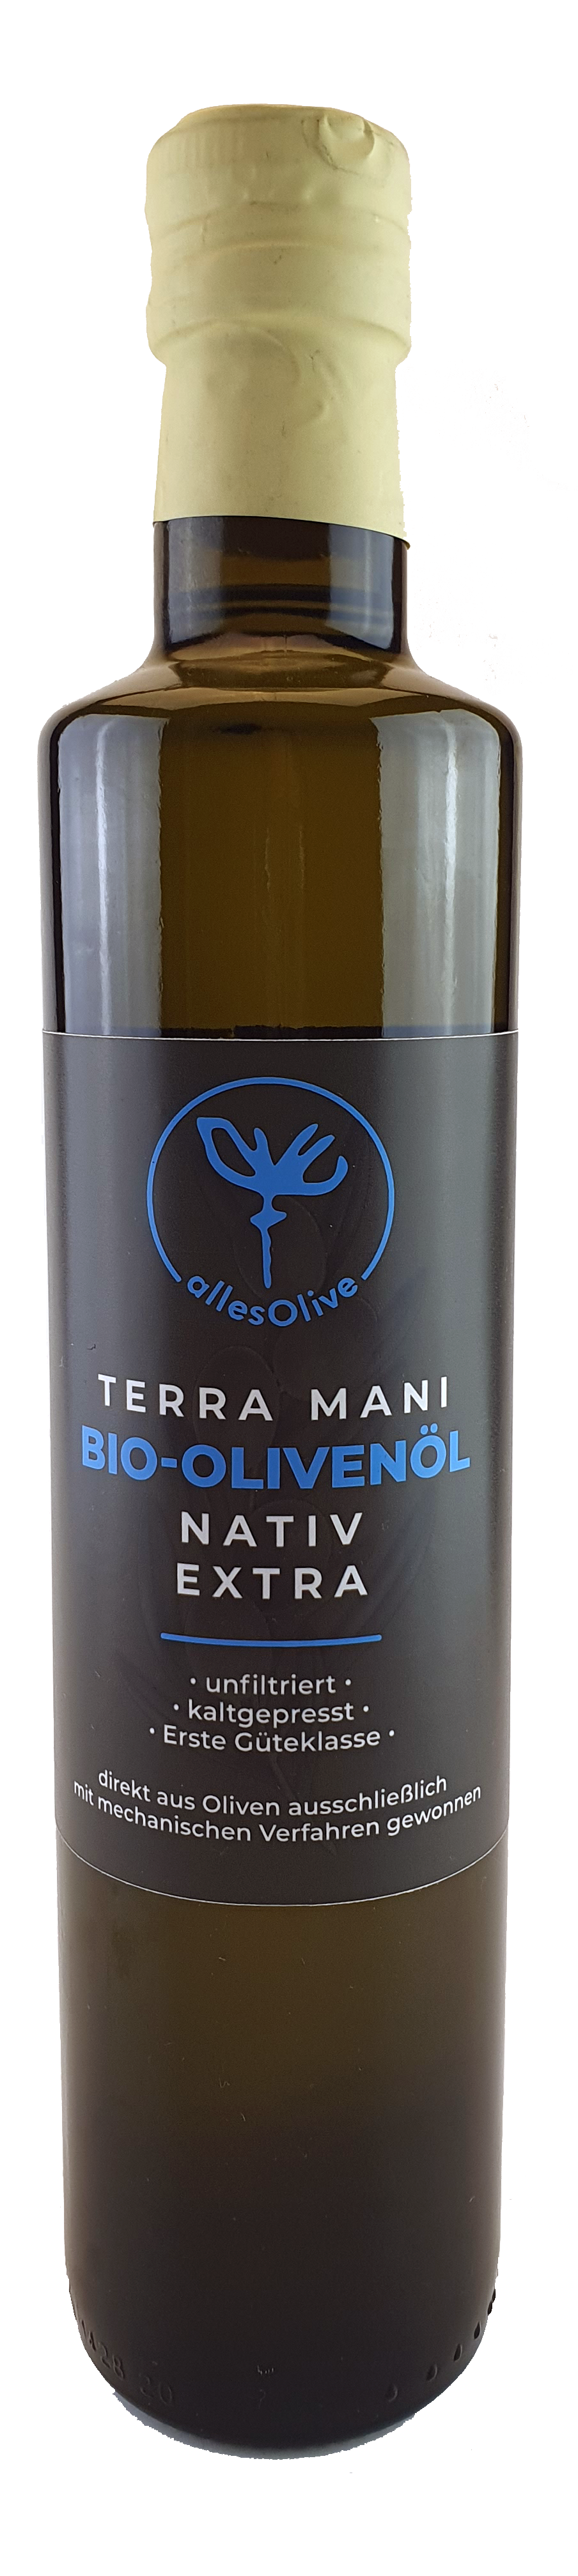 TERRA-MANI Native Organic Extra Virgin Olive Oil, unfiltered, 500ml bottle.